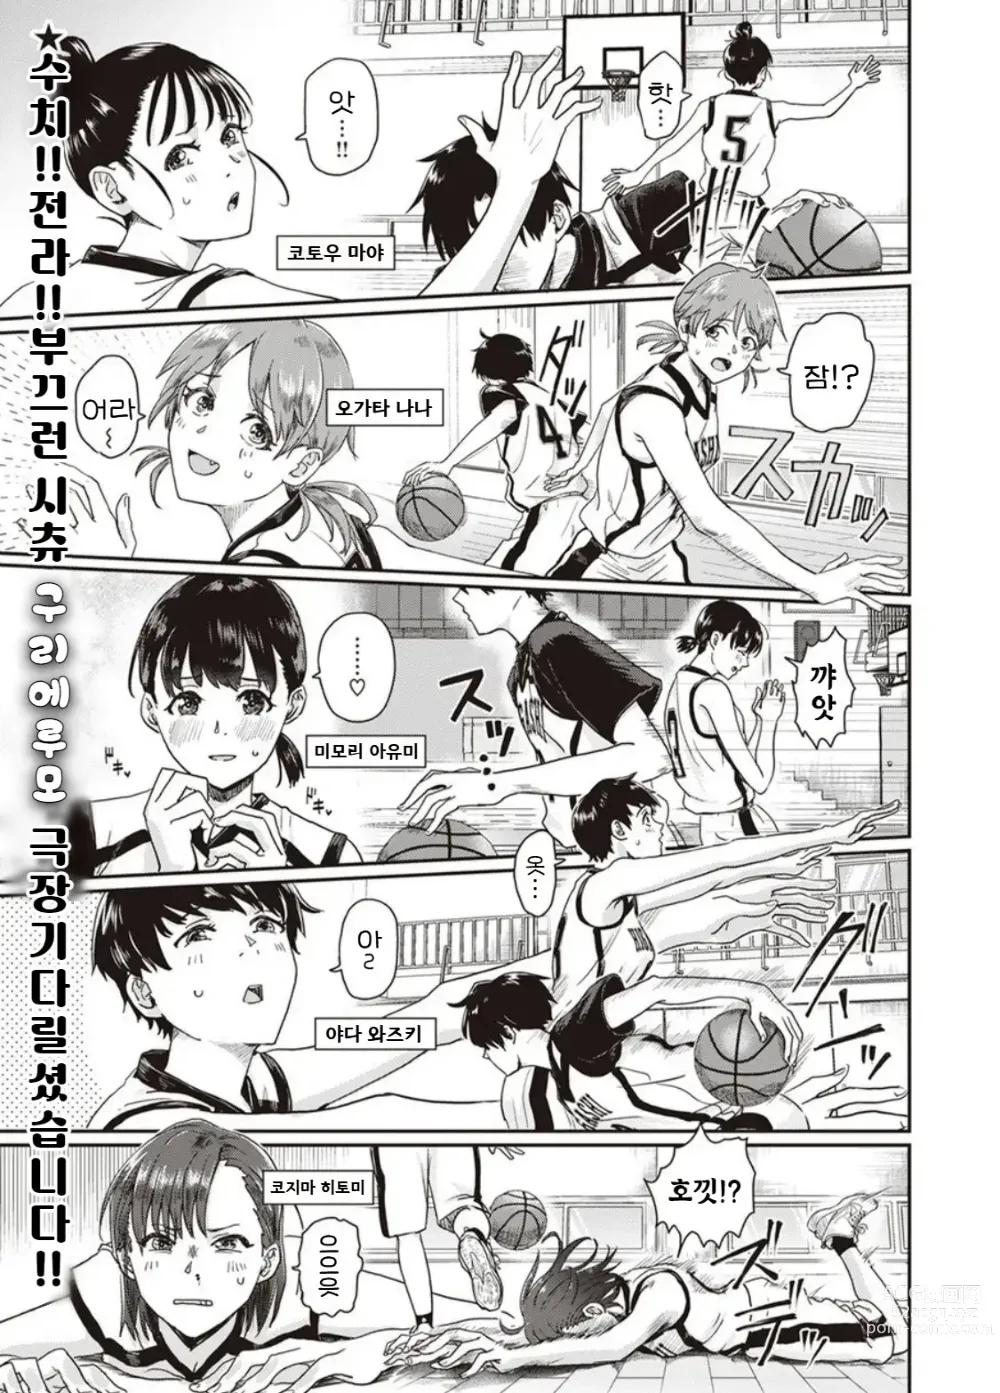 Page 1 of manga 1 on 5